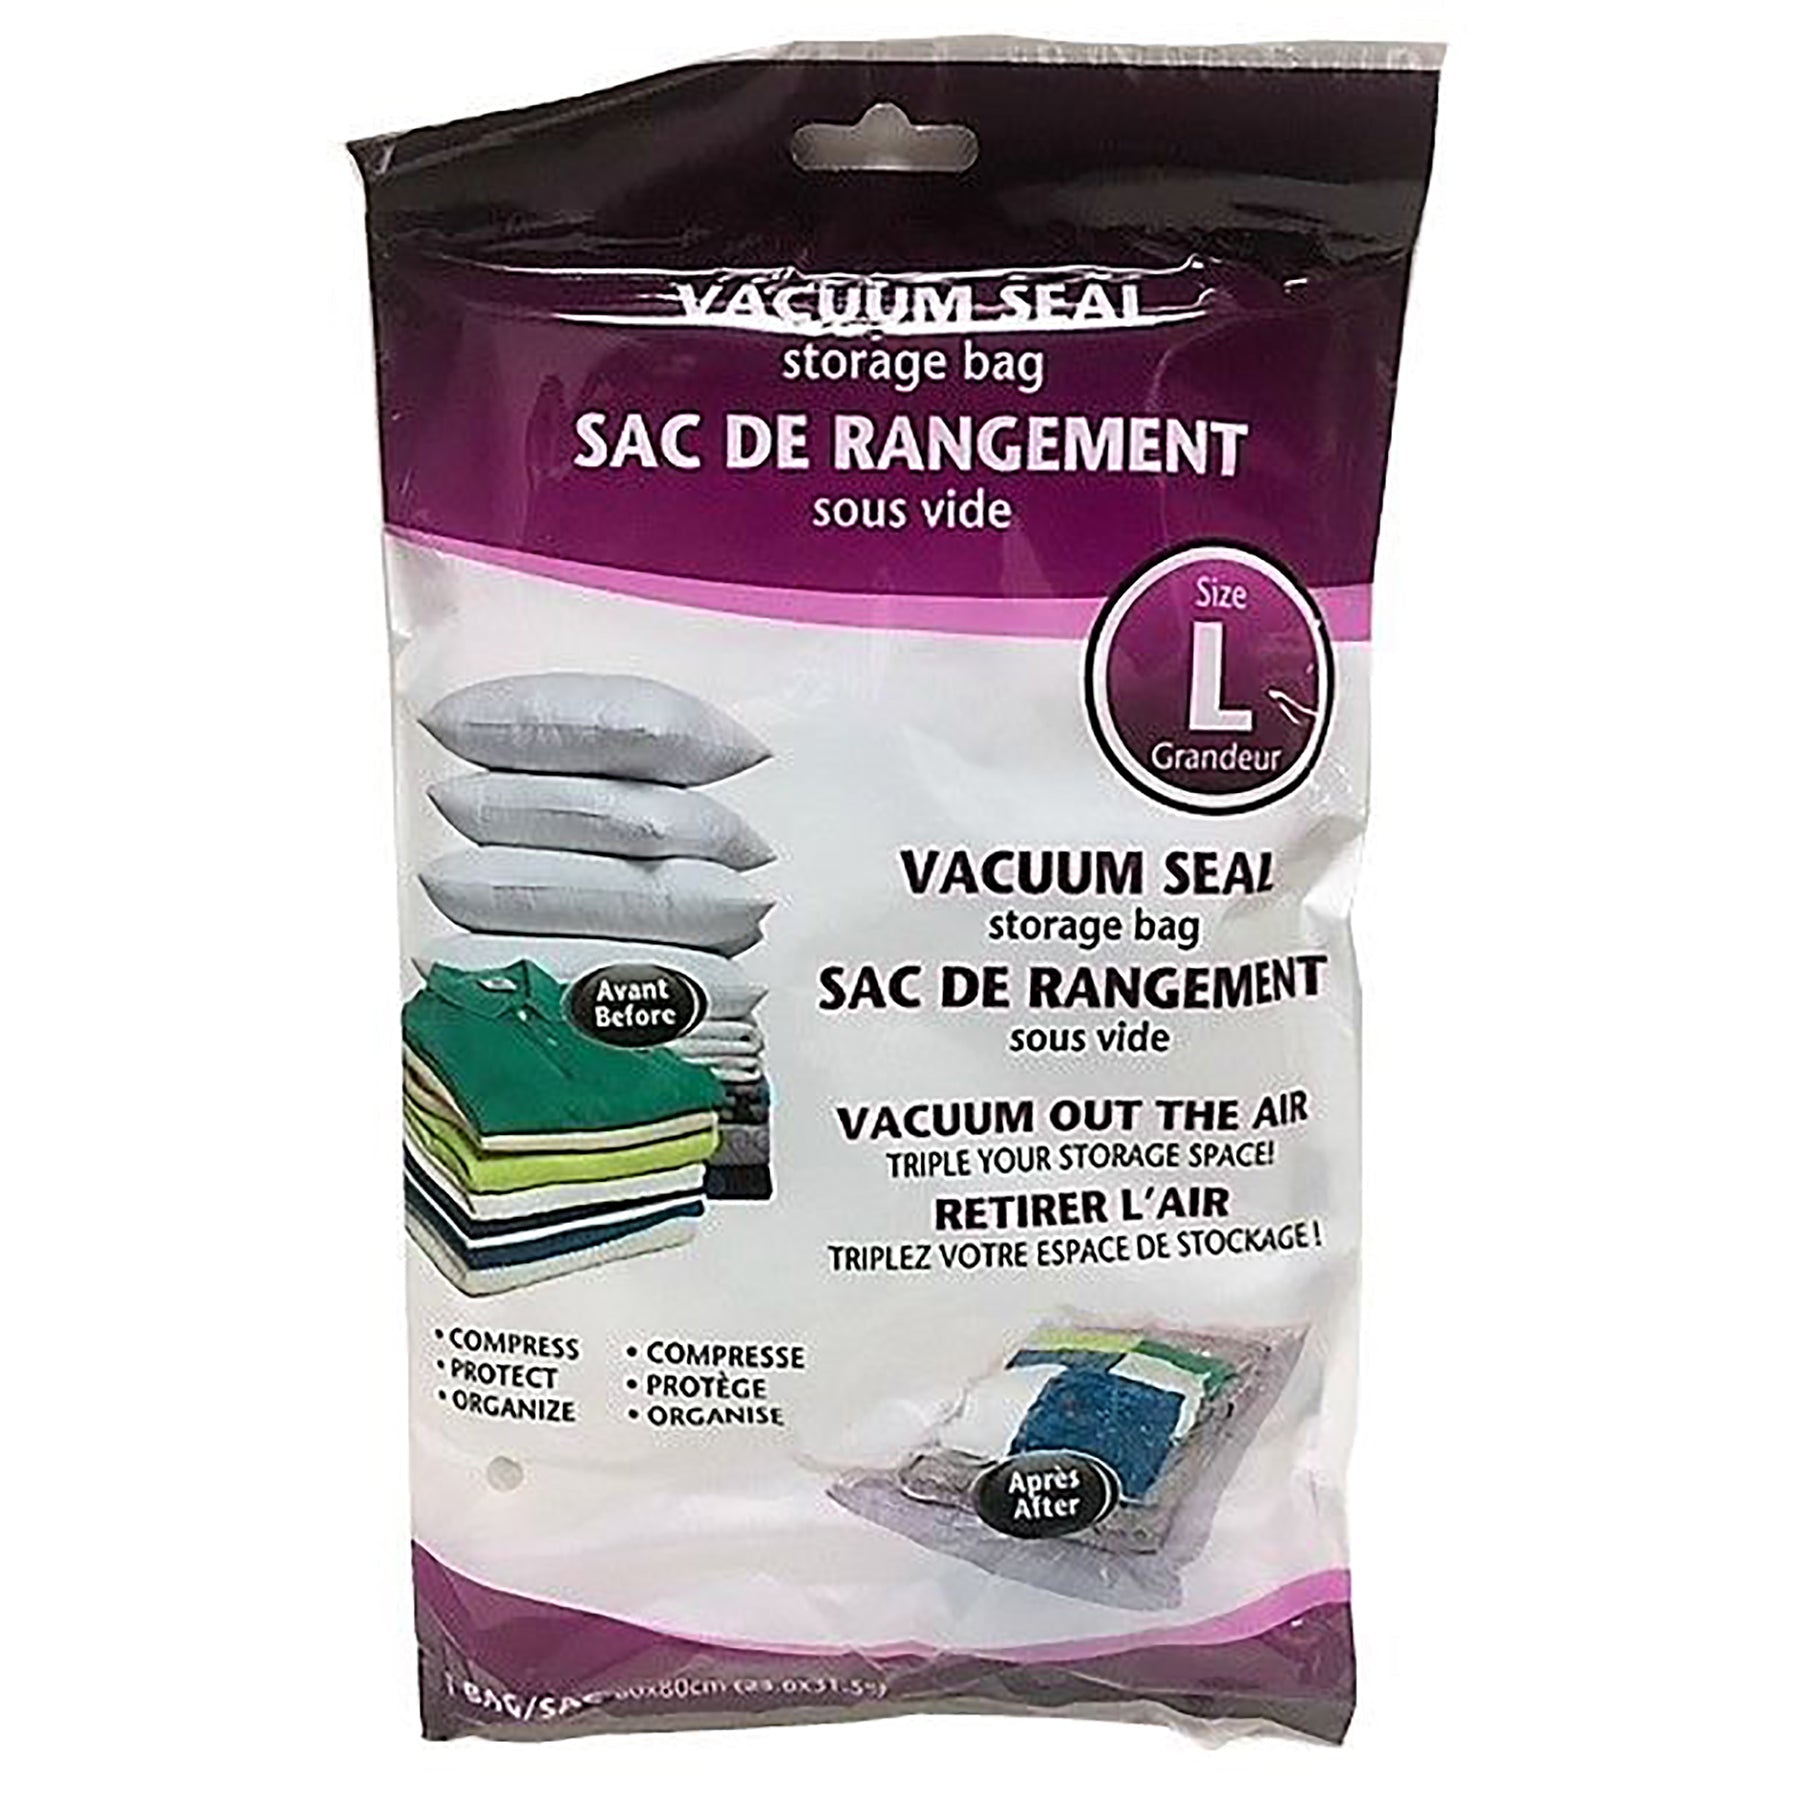 Vacuum Seal Storage Bag Reusable - Waterproof - Airtight Large 23.6x31.5in